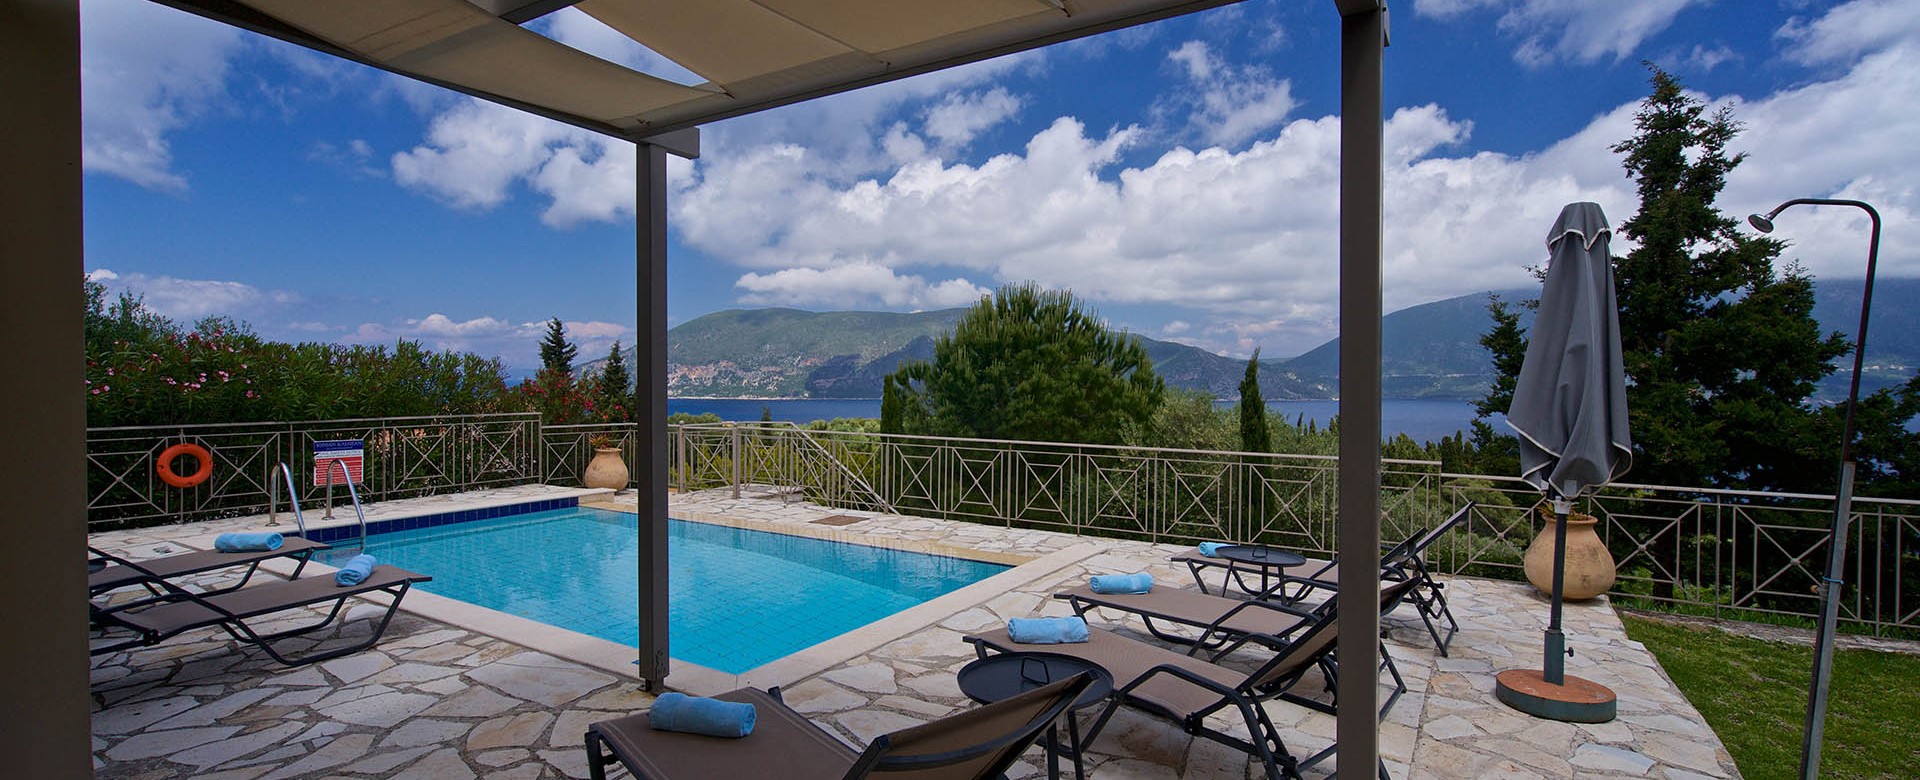 villa-helios-swimming-pool-patio.jpg